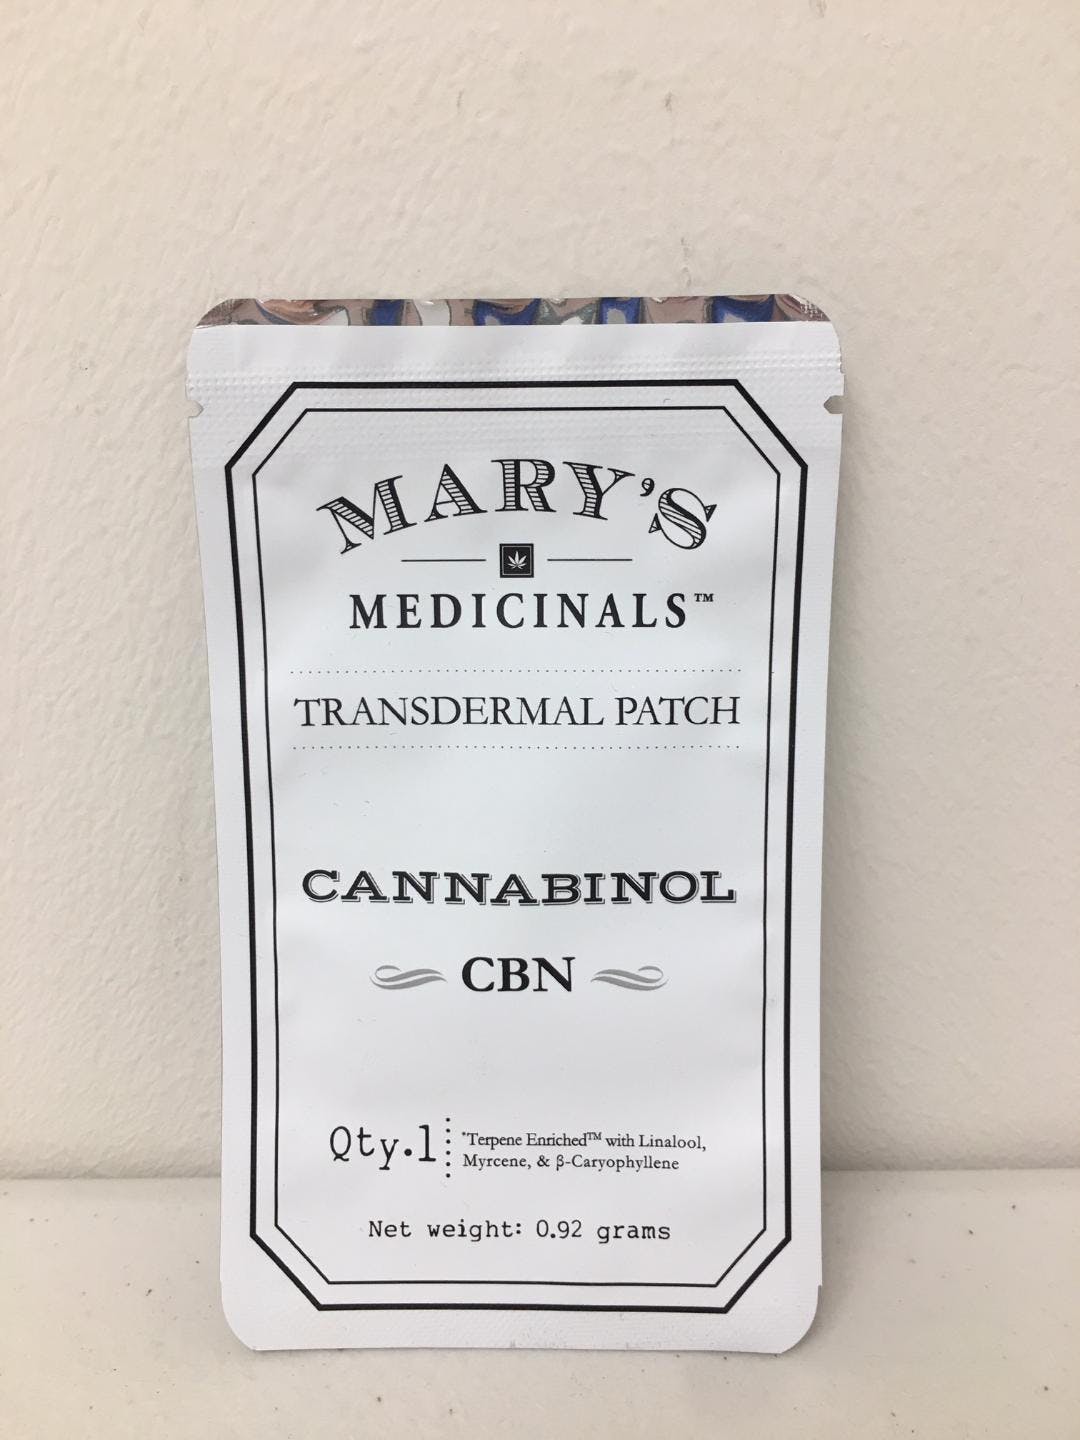 marijuana-dispensaries-11717-old-national-pike-new-market-cbn-patch-marys-medicinals